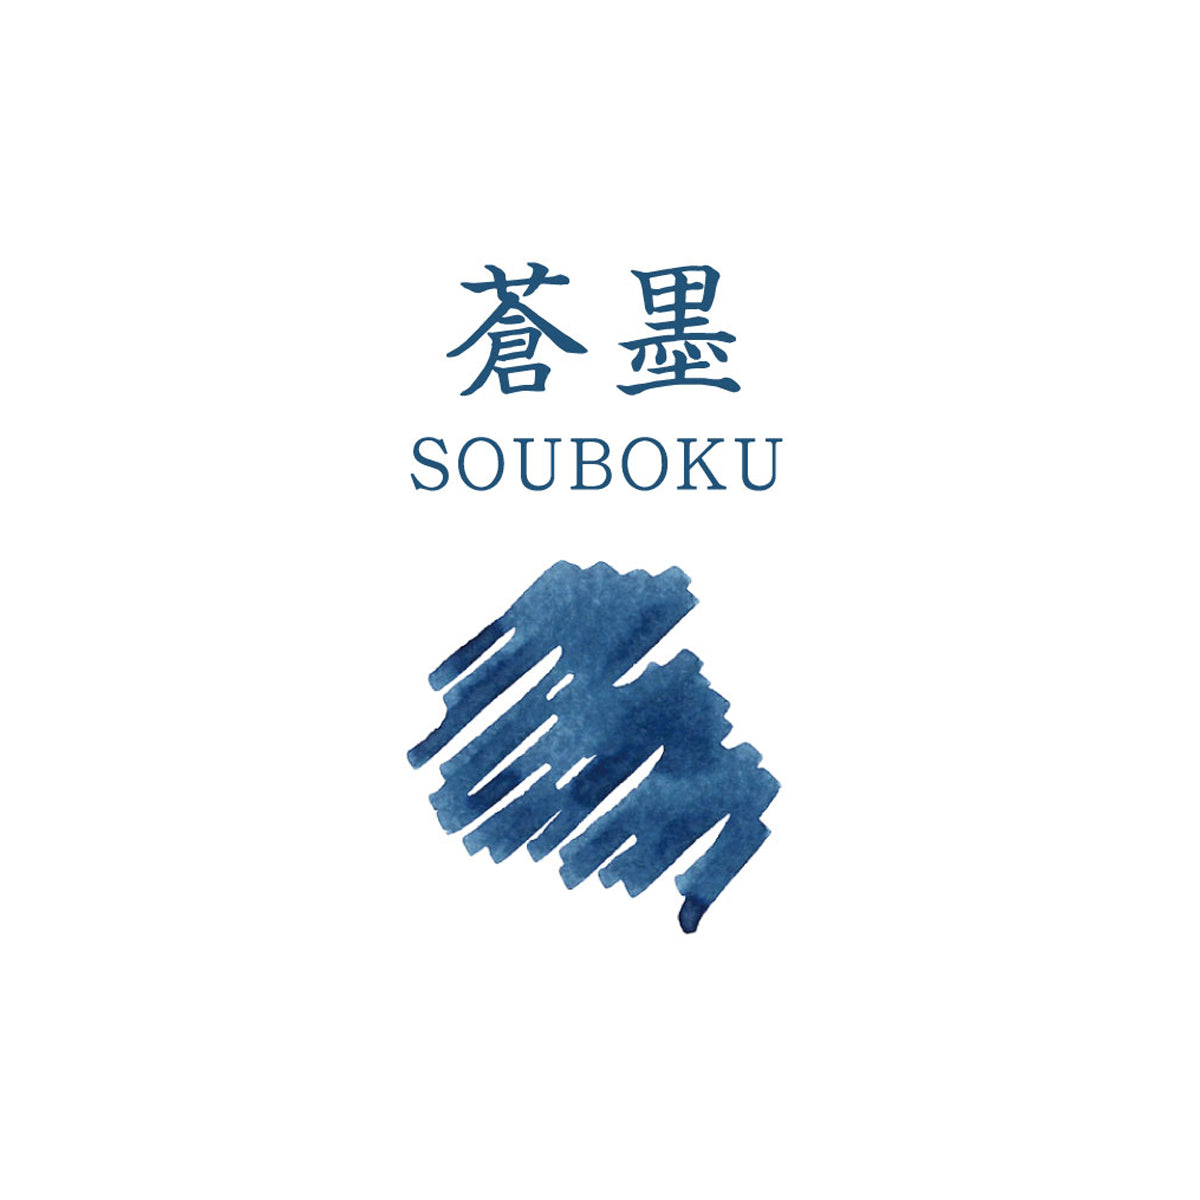 Sailor Ink - Souboku